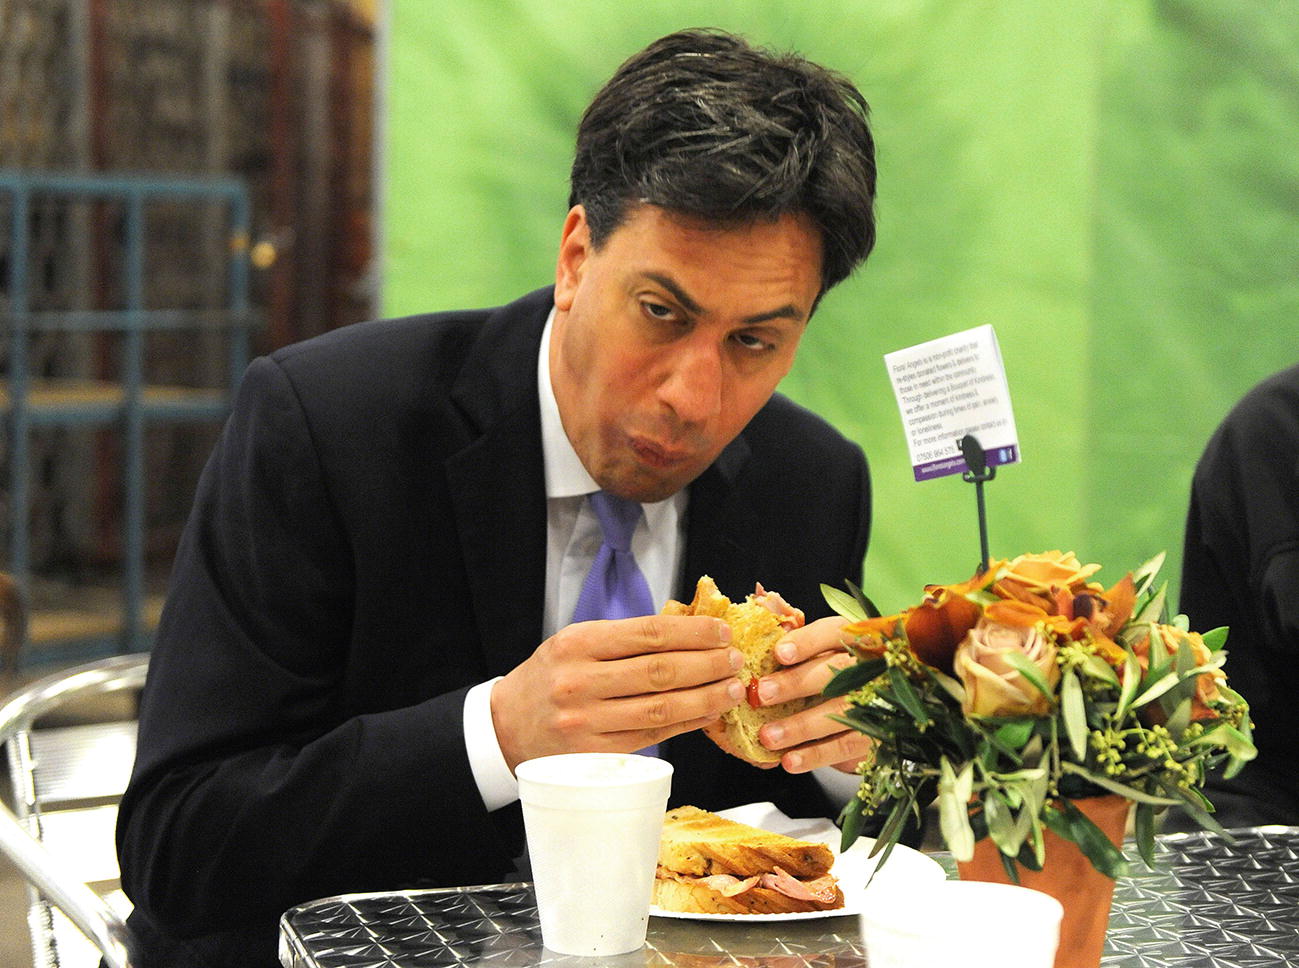 Flashback: Bacon Sandwich Destroys Ed Miliband